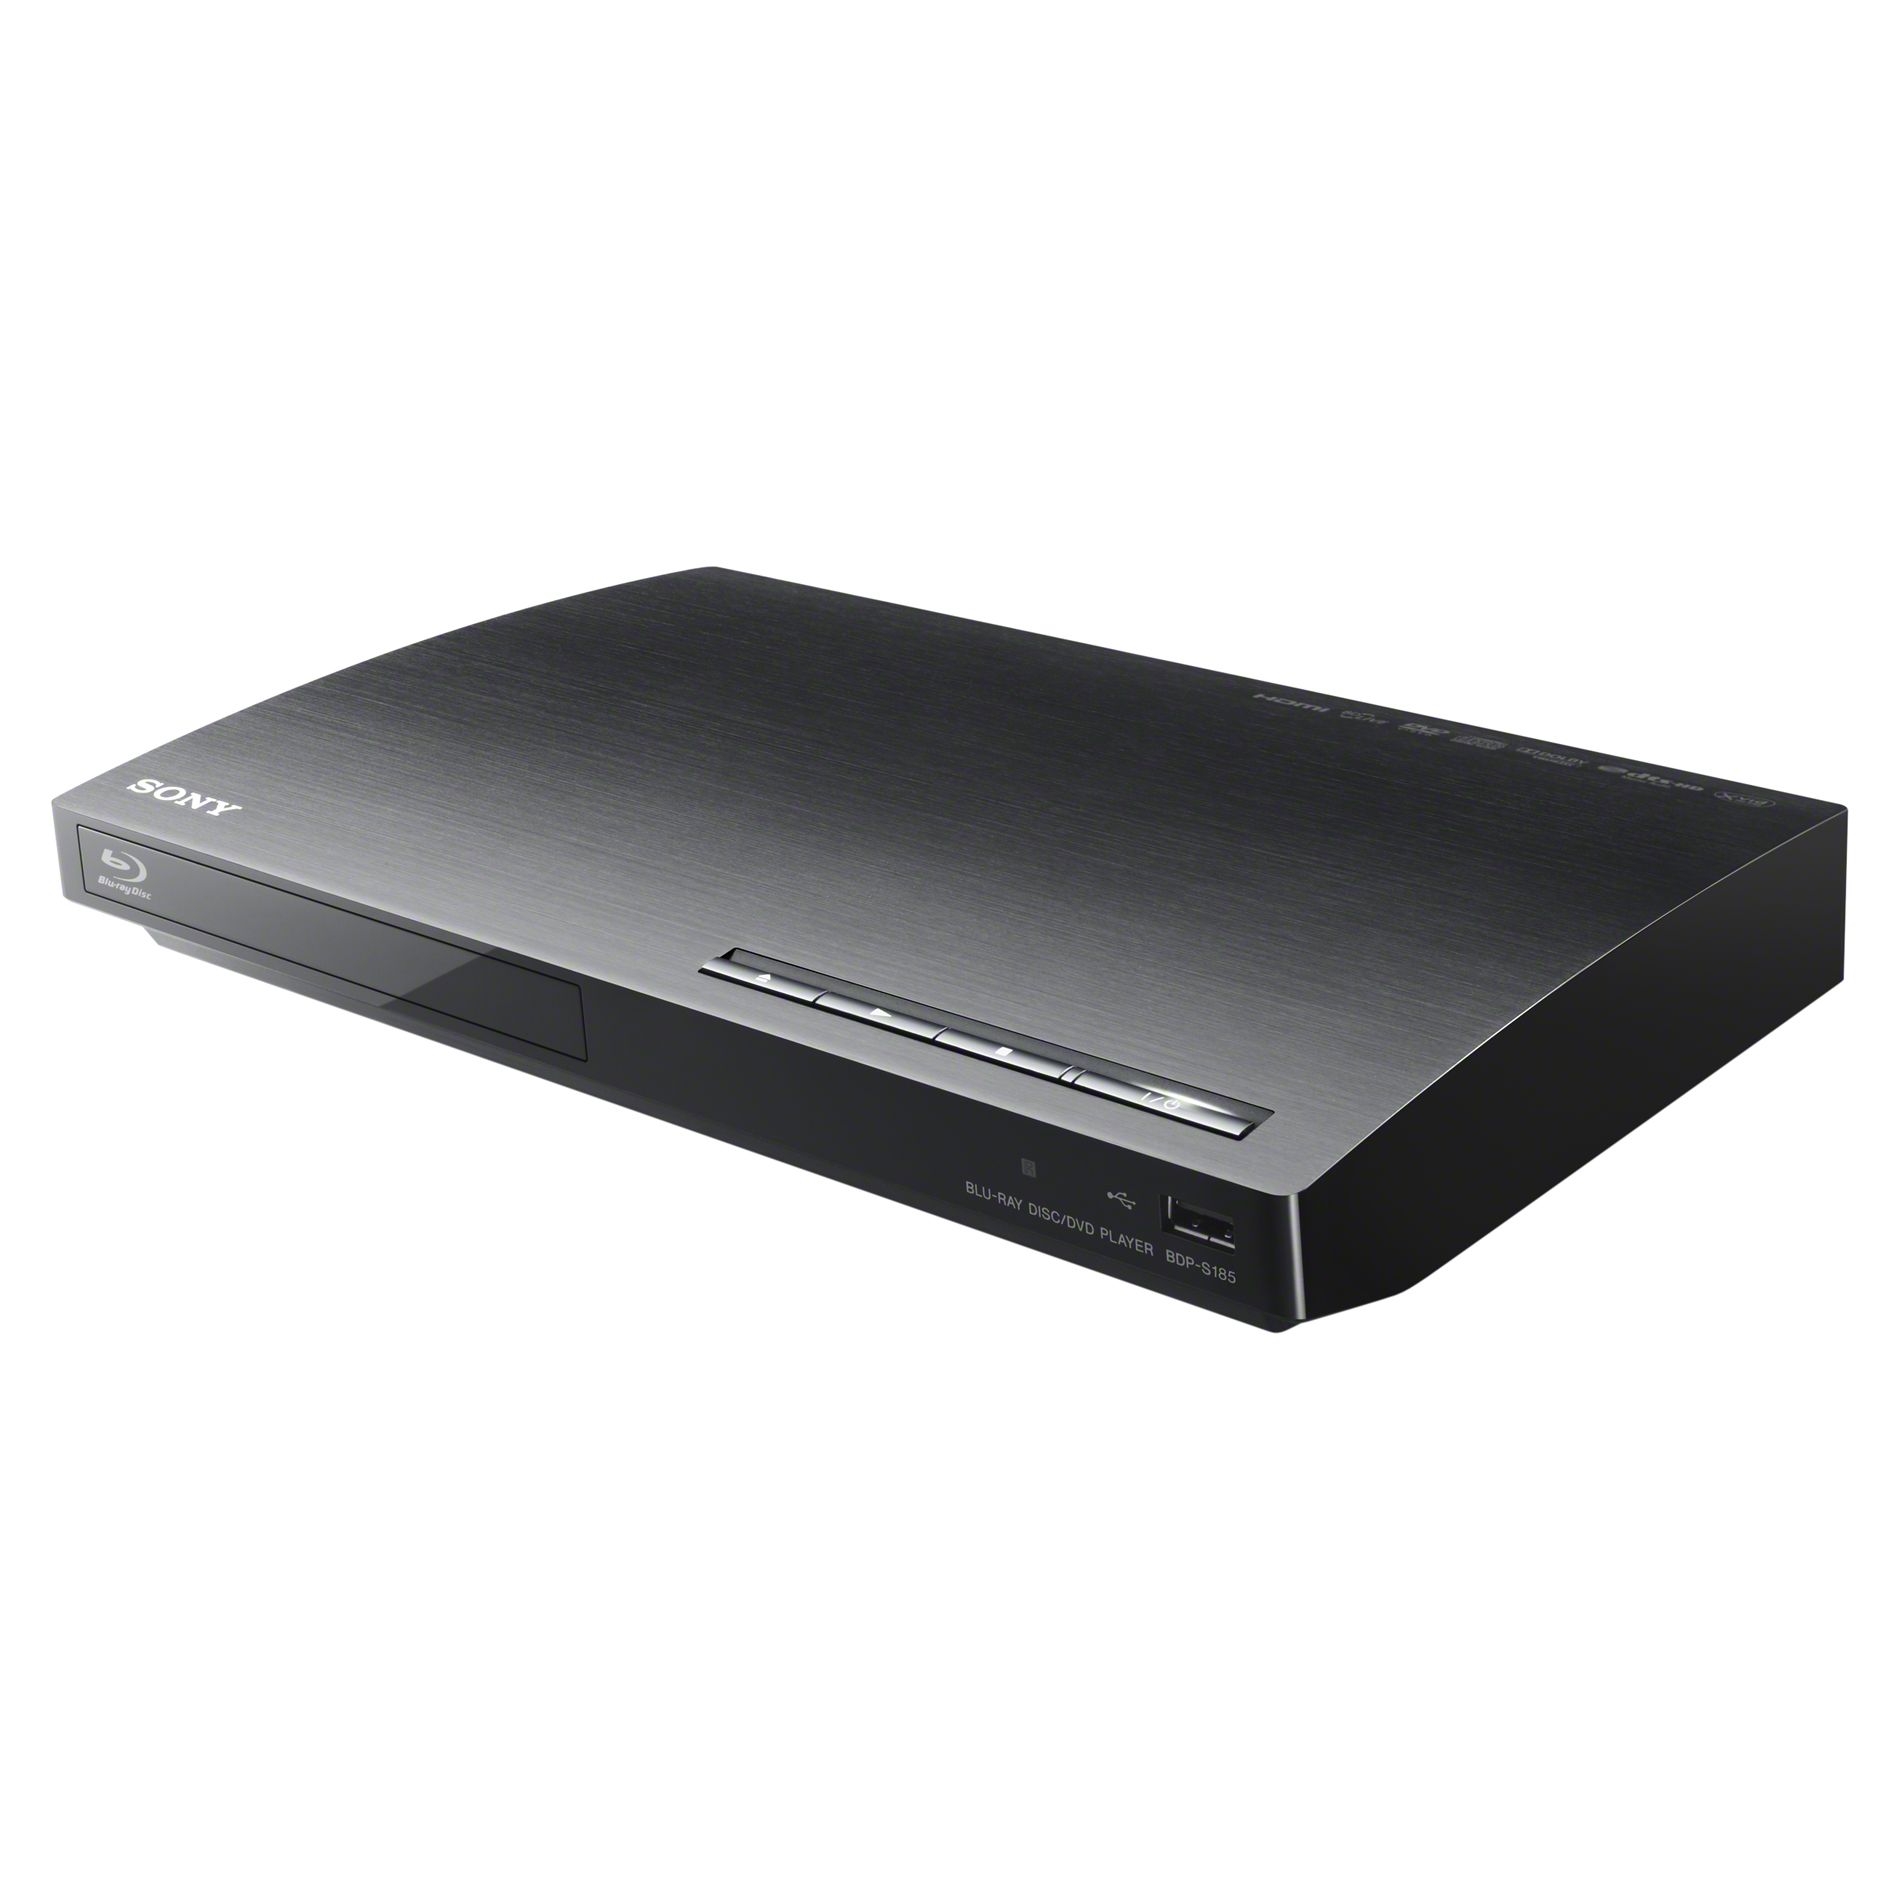 Sony Blu-Ray Disc Player w/ Internet Streaming - BDPS185